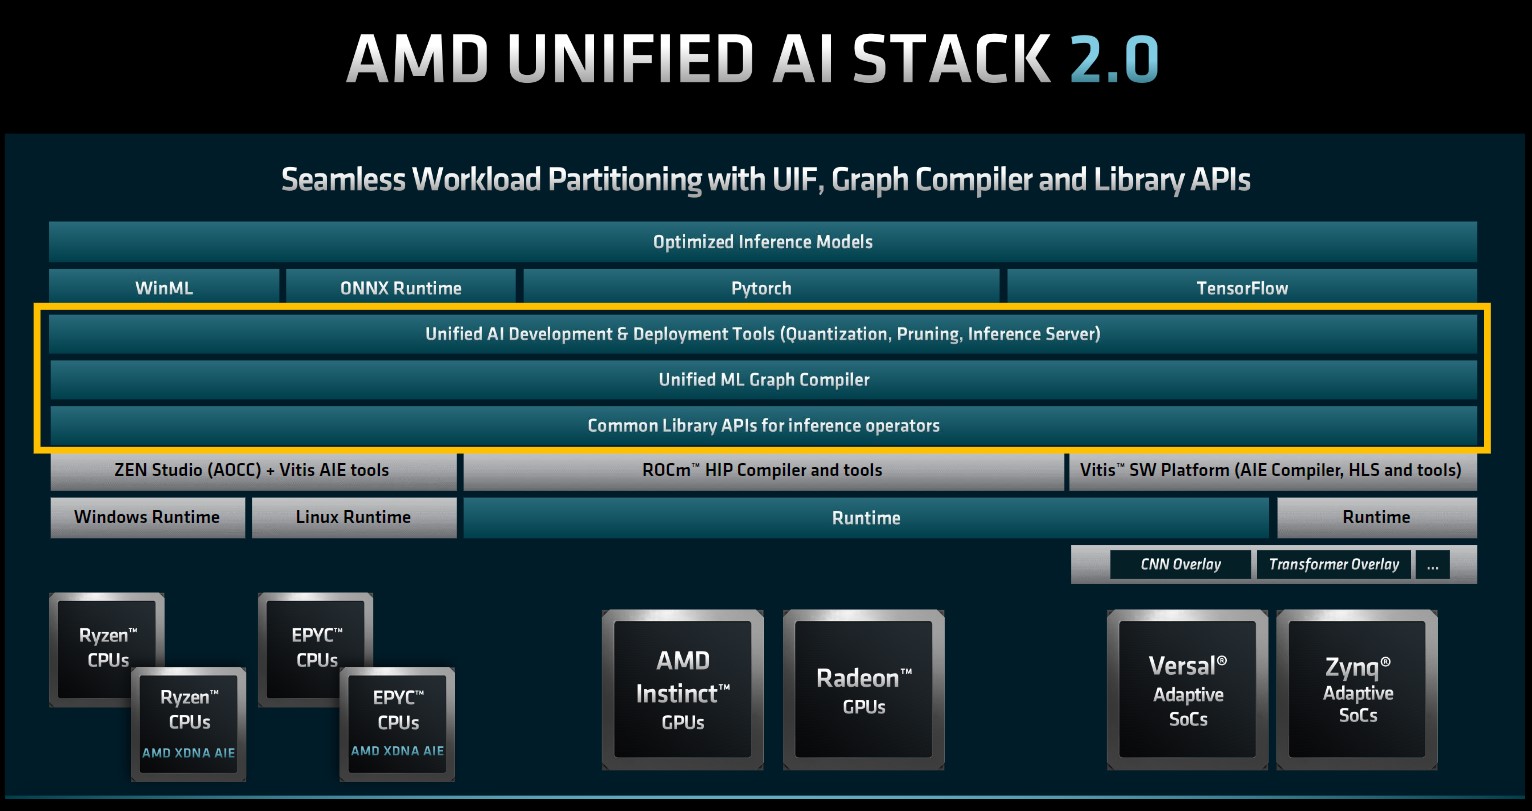 AMD FAD 2022 Embedded Leadership